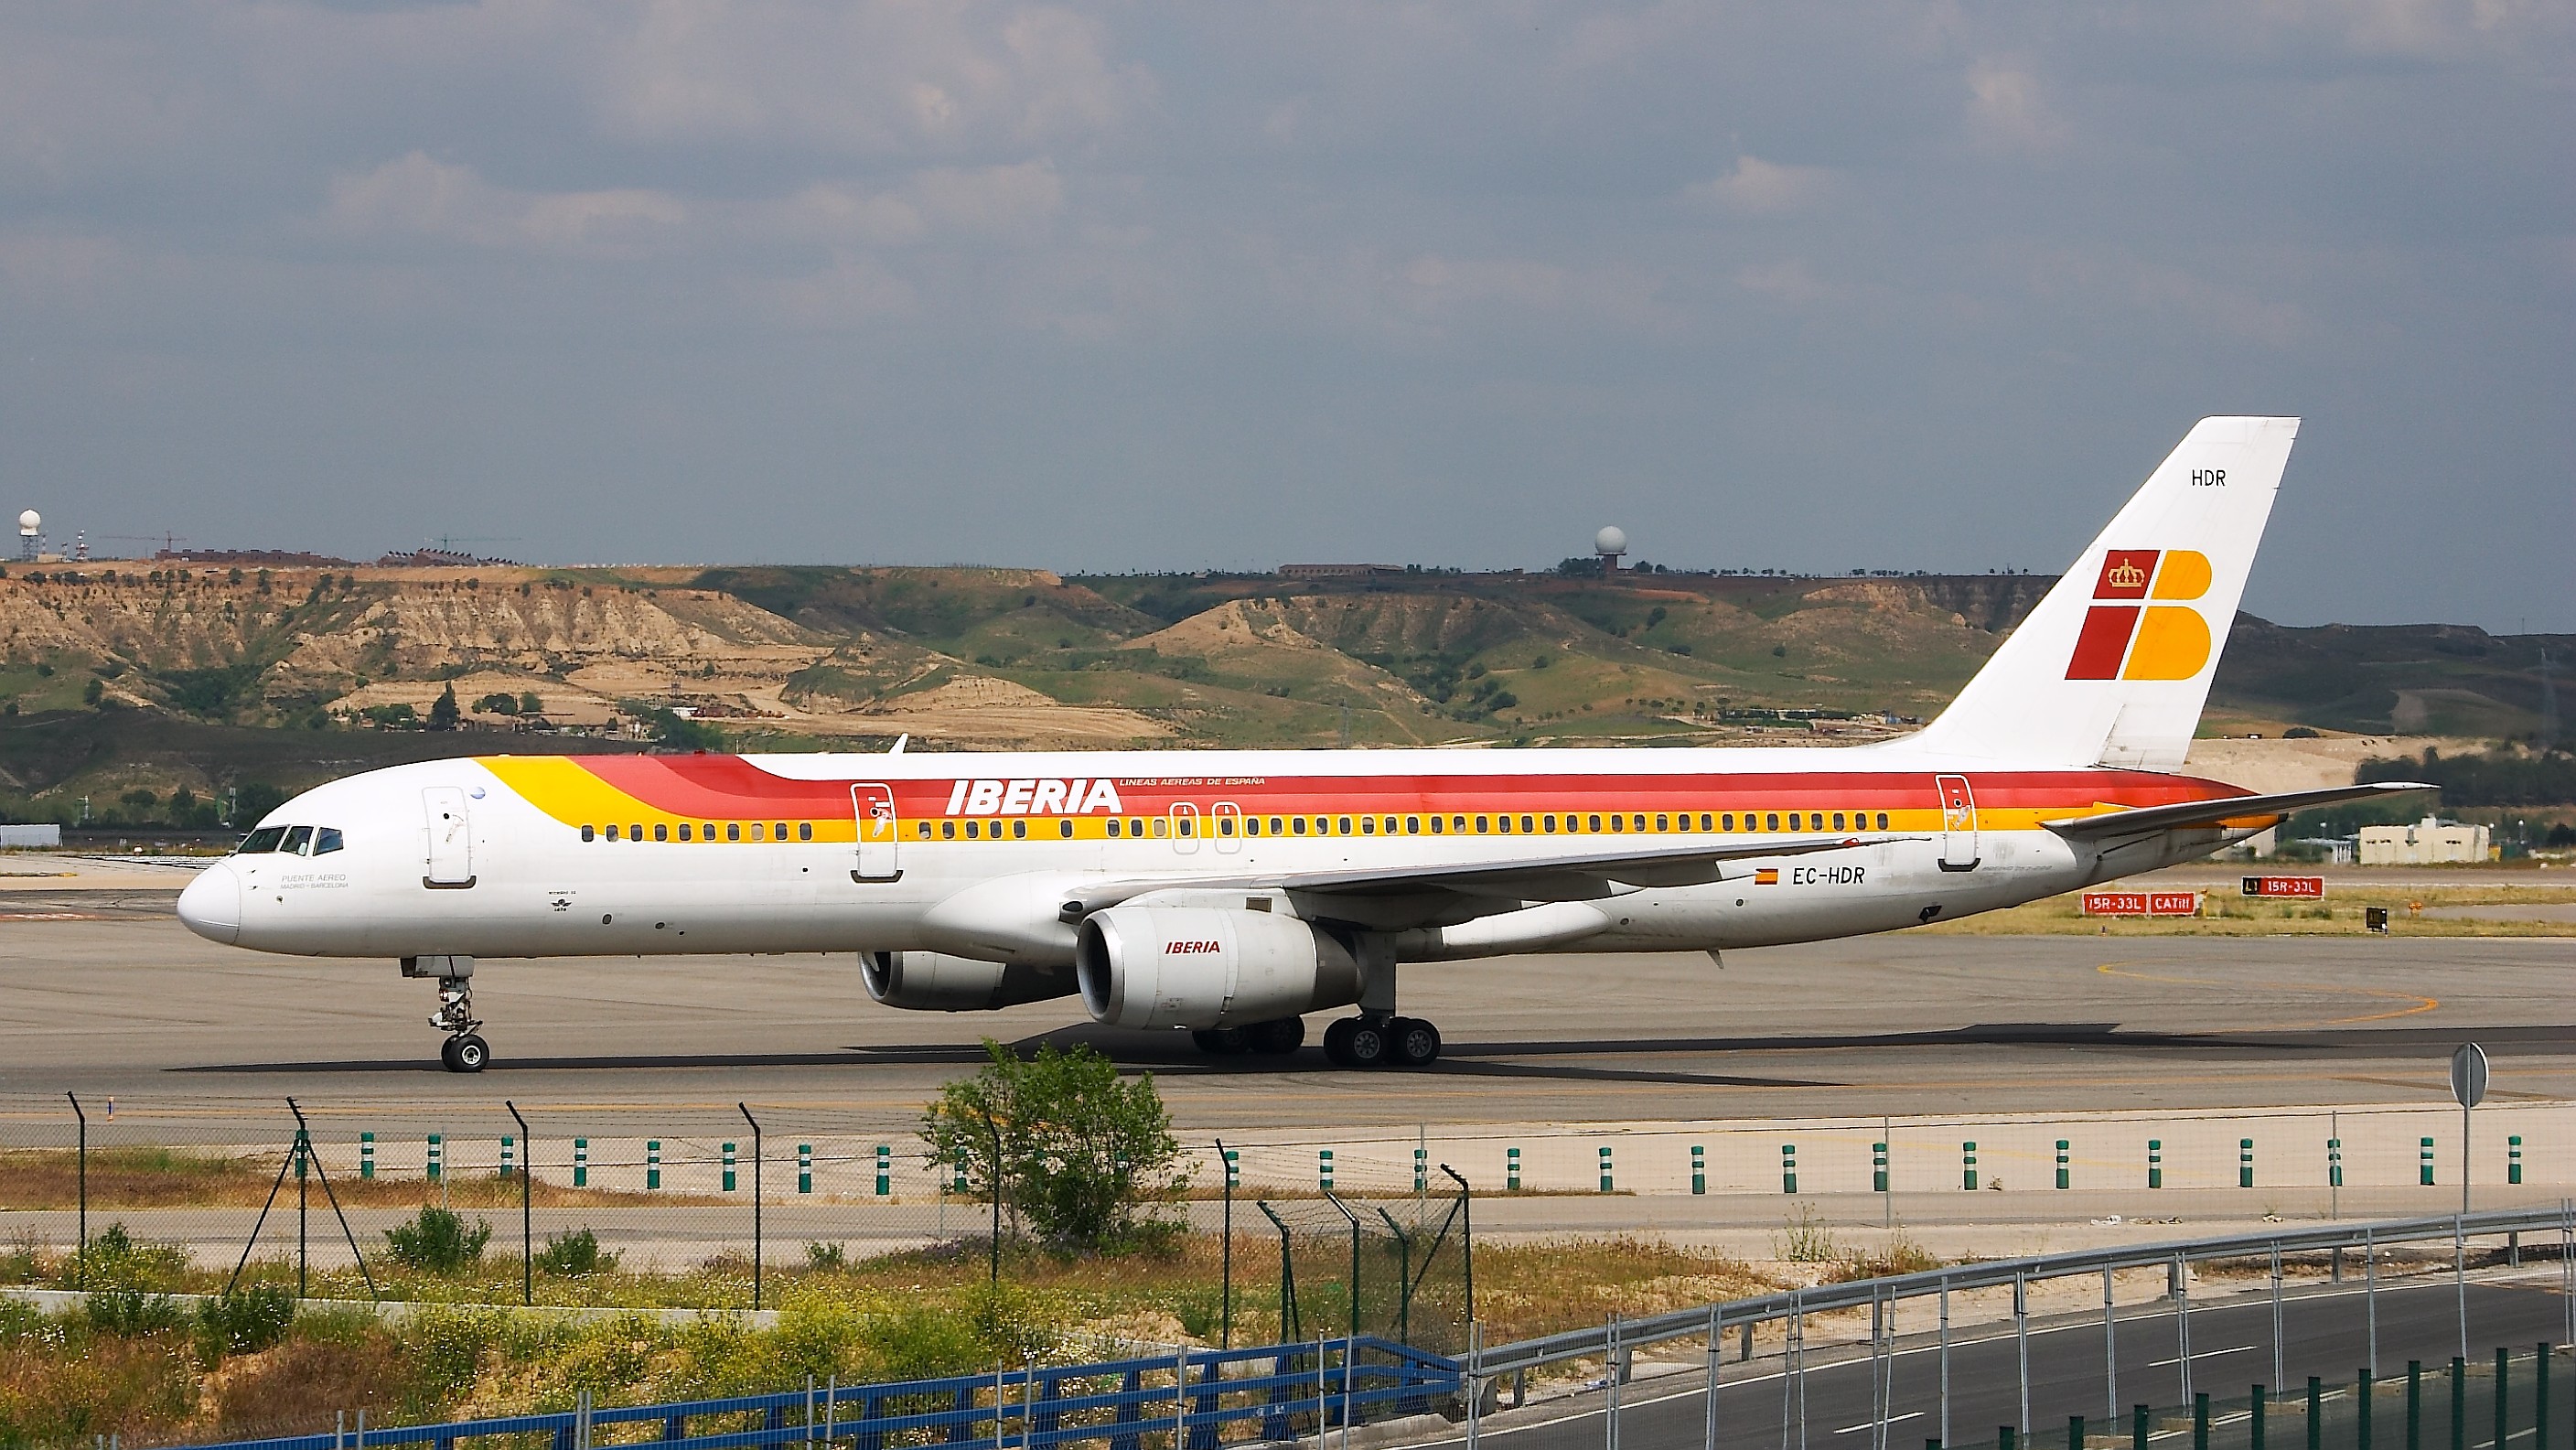 Boeing 757-256 - Iberia - EC-HDR - LEMD